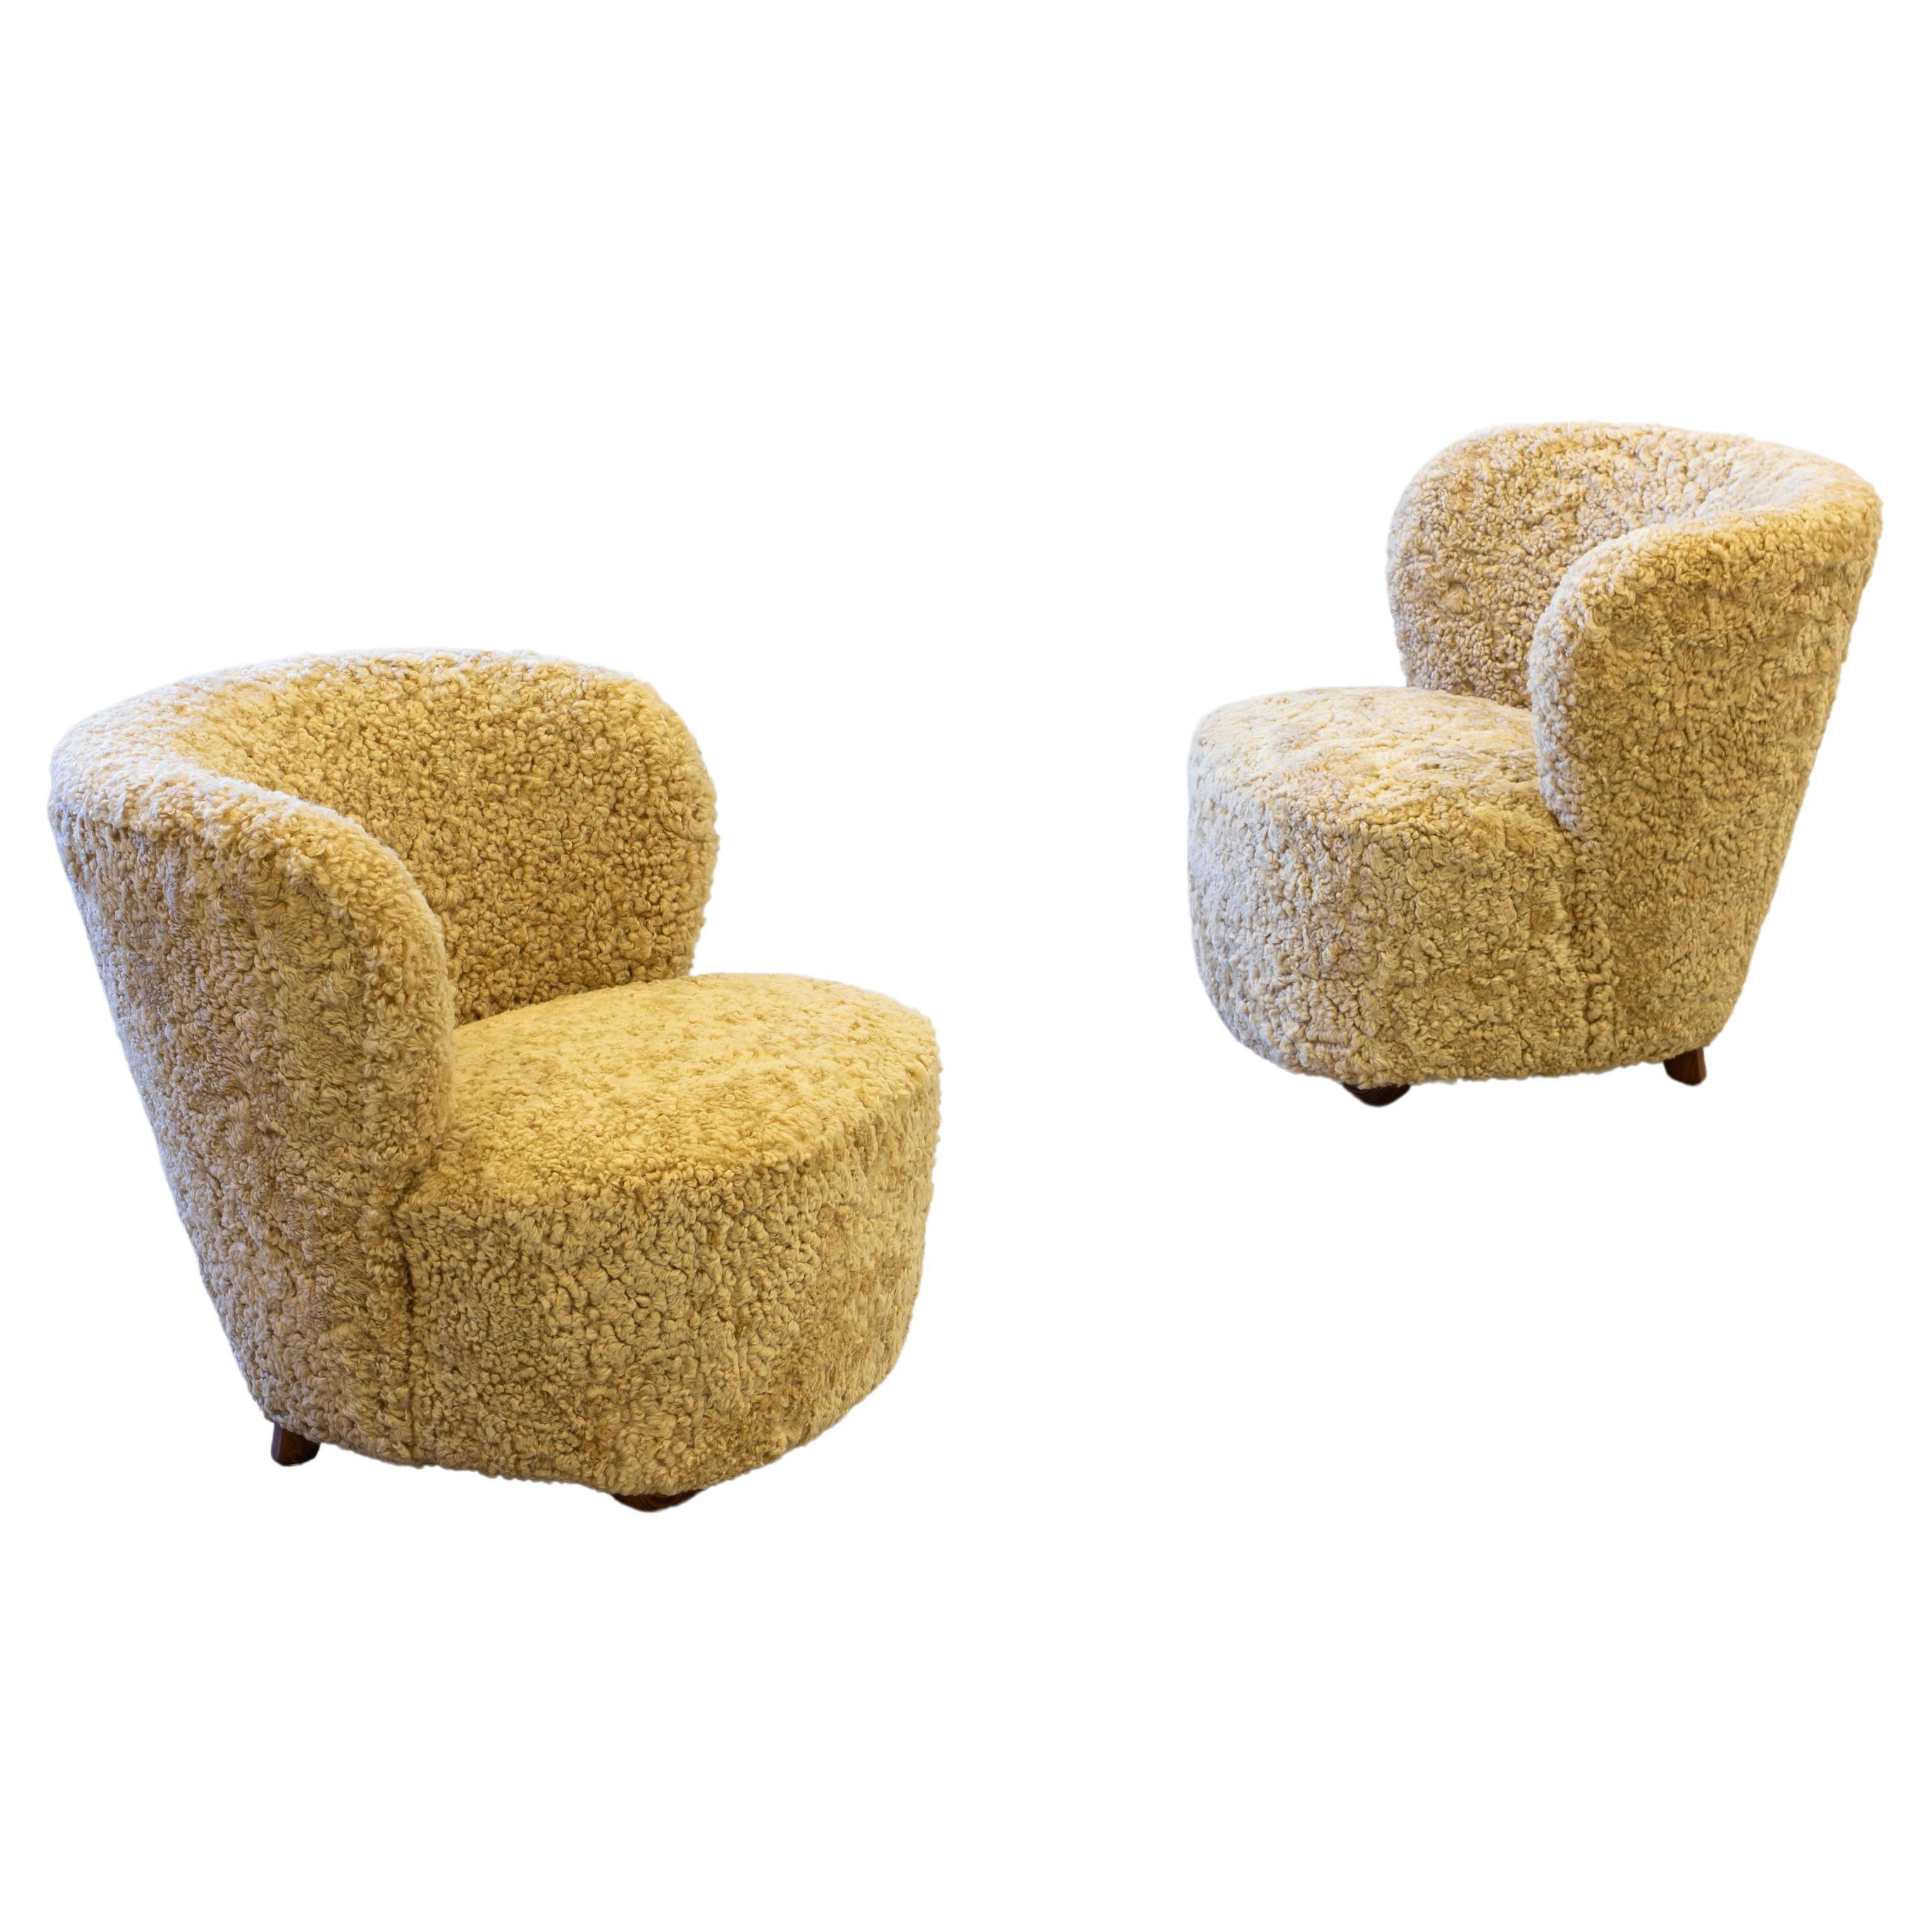 Pair of sheepskin chairs in the manner of Viggo Boesen, Danish modern, 1940s For Sale